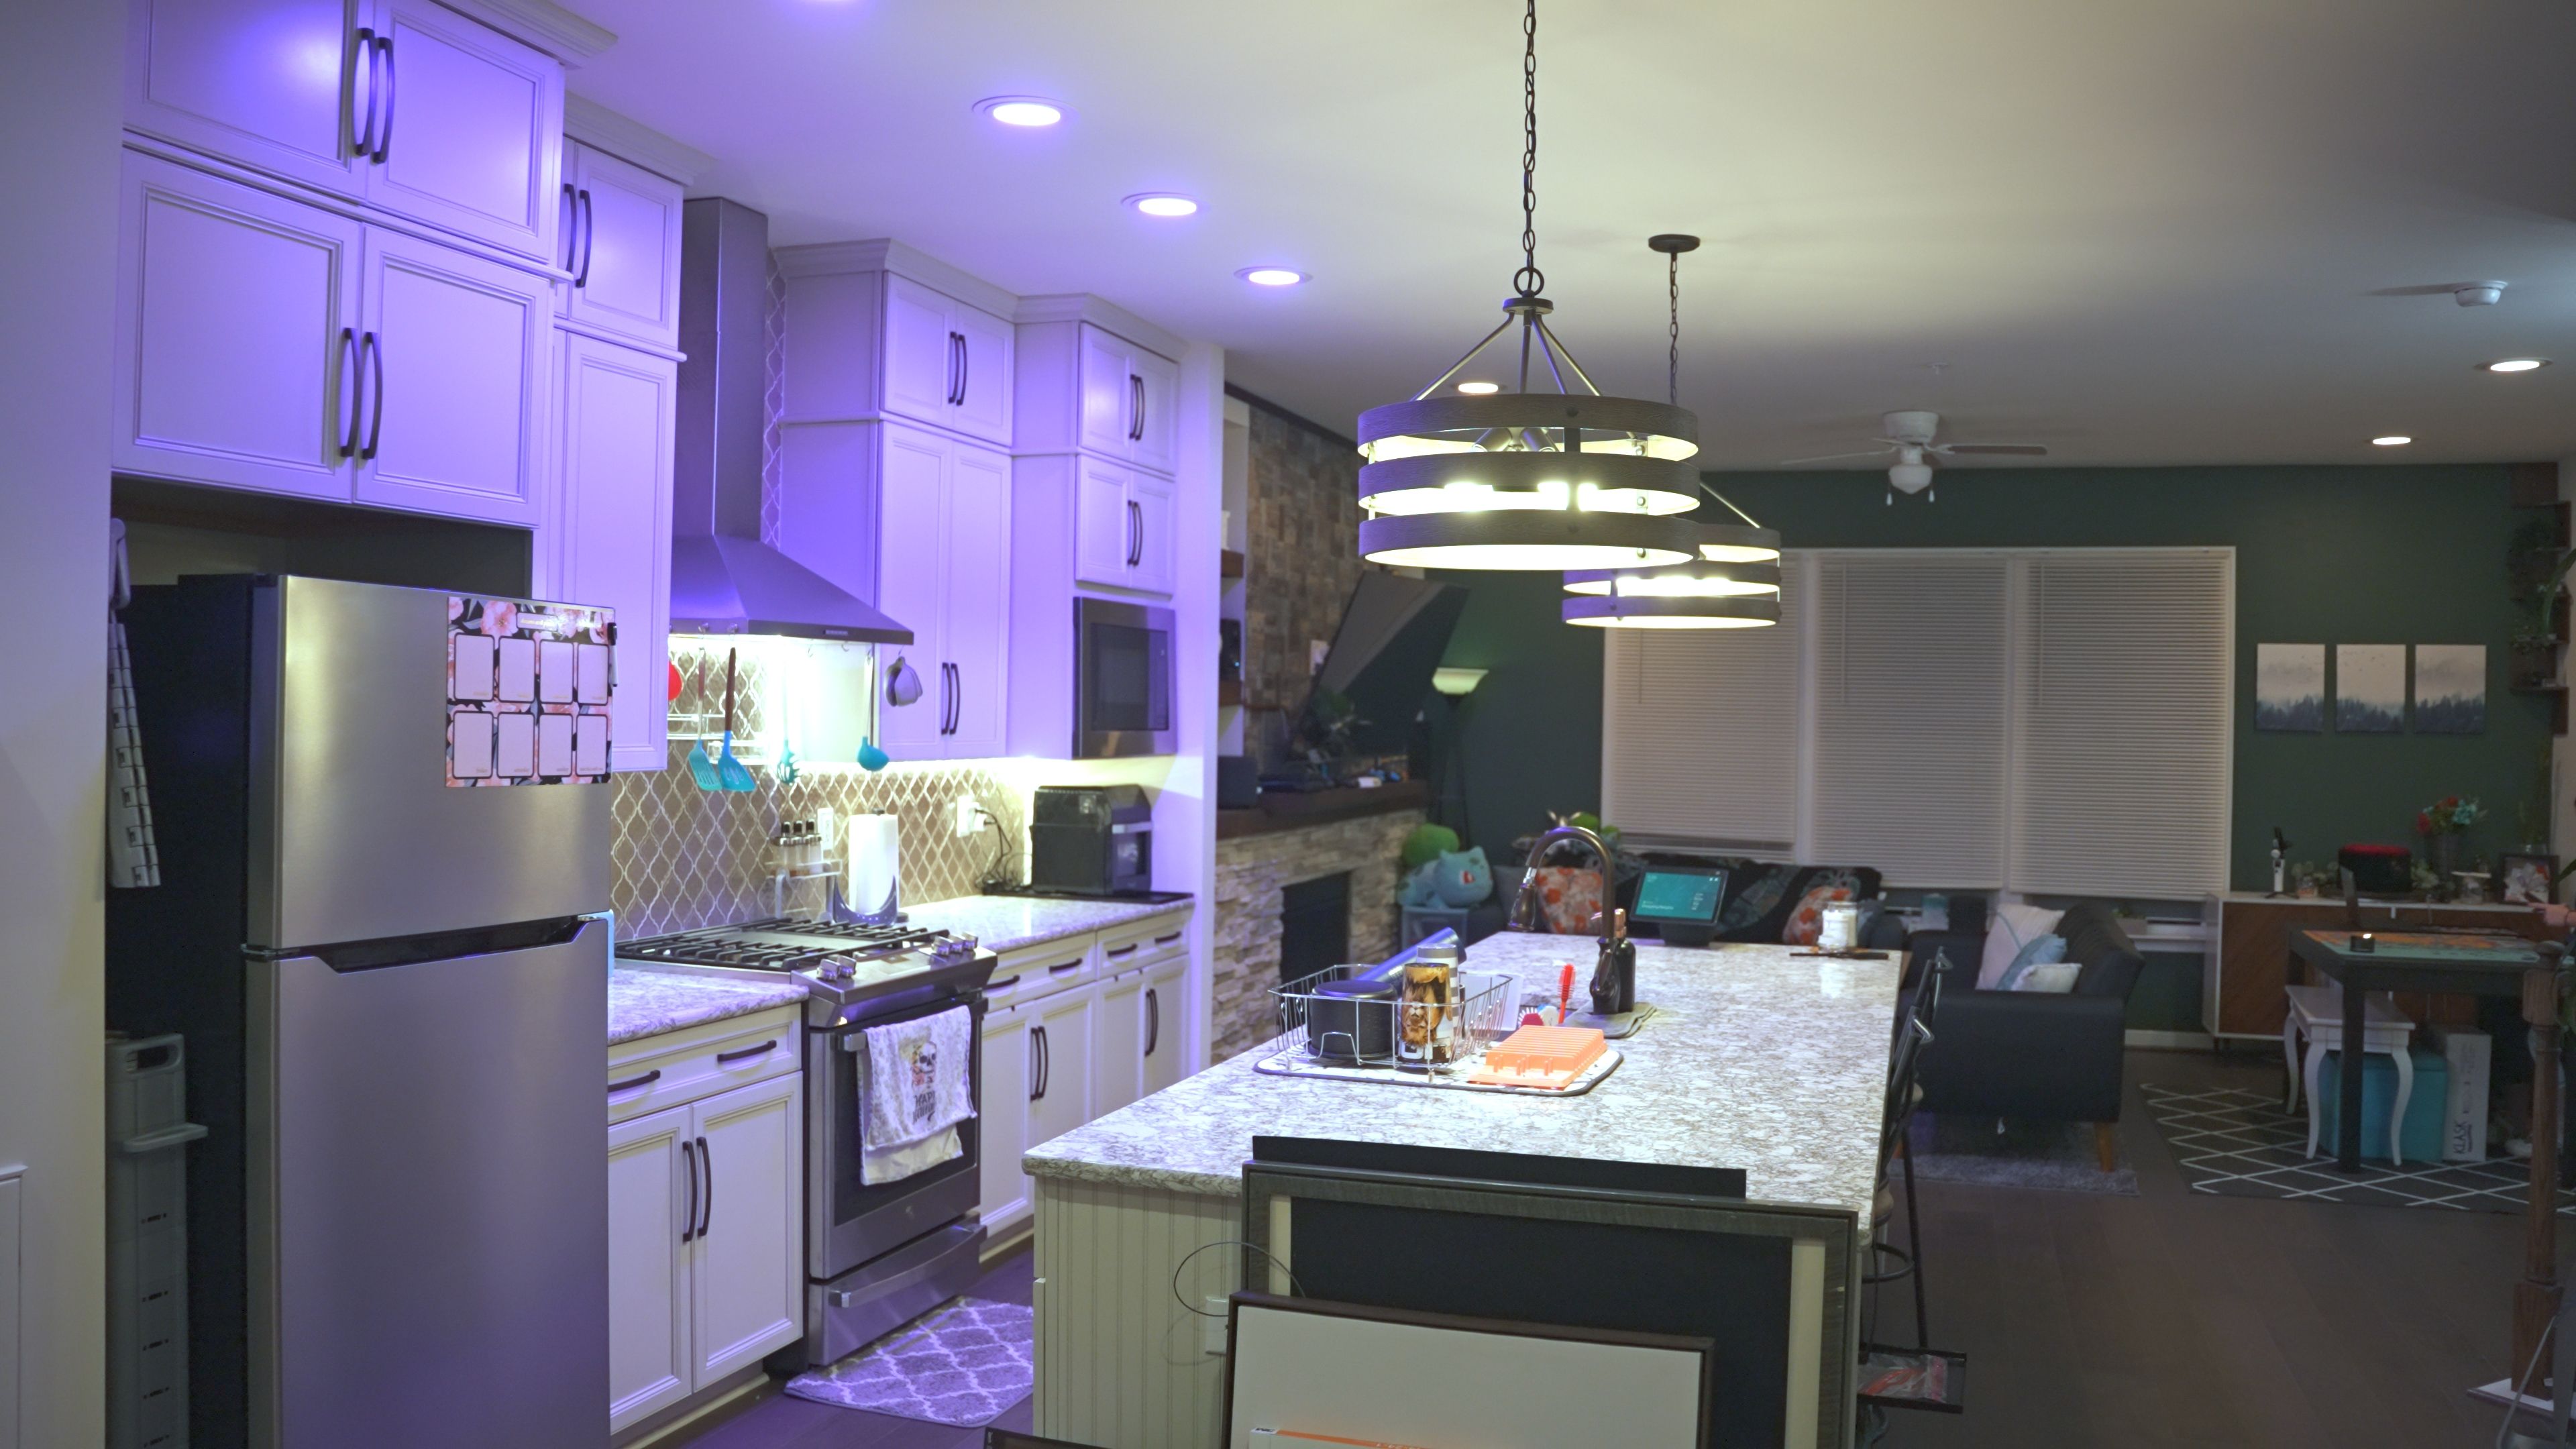 GE Cync - Kitchen lights set to purple